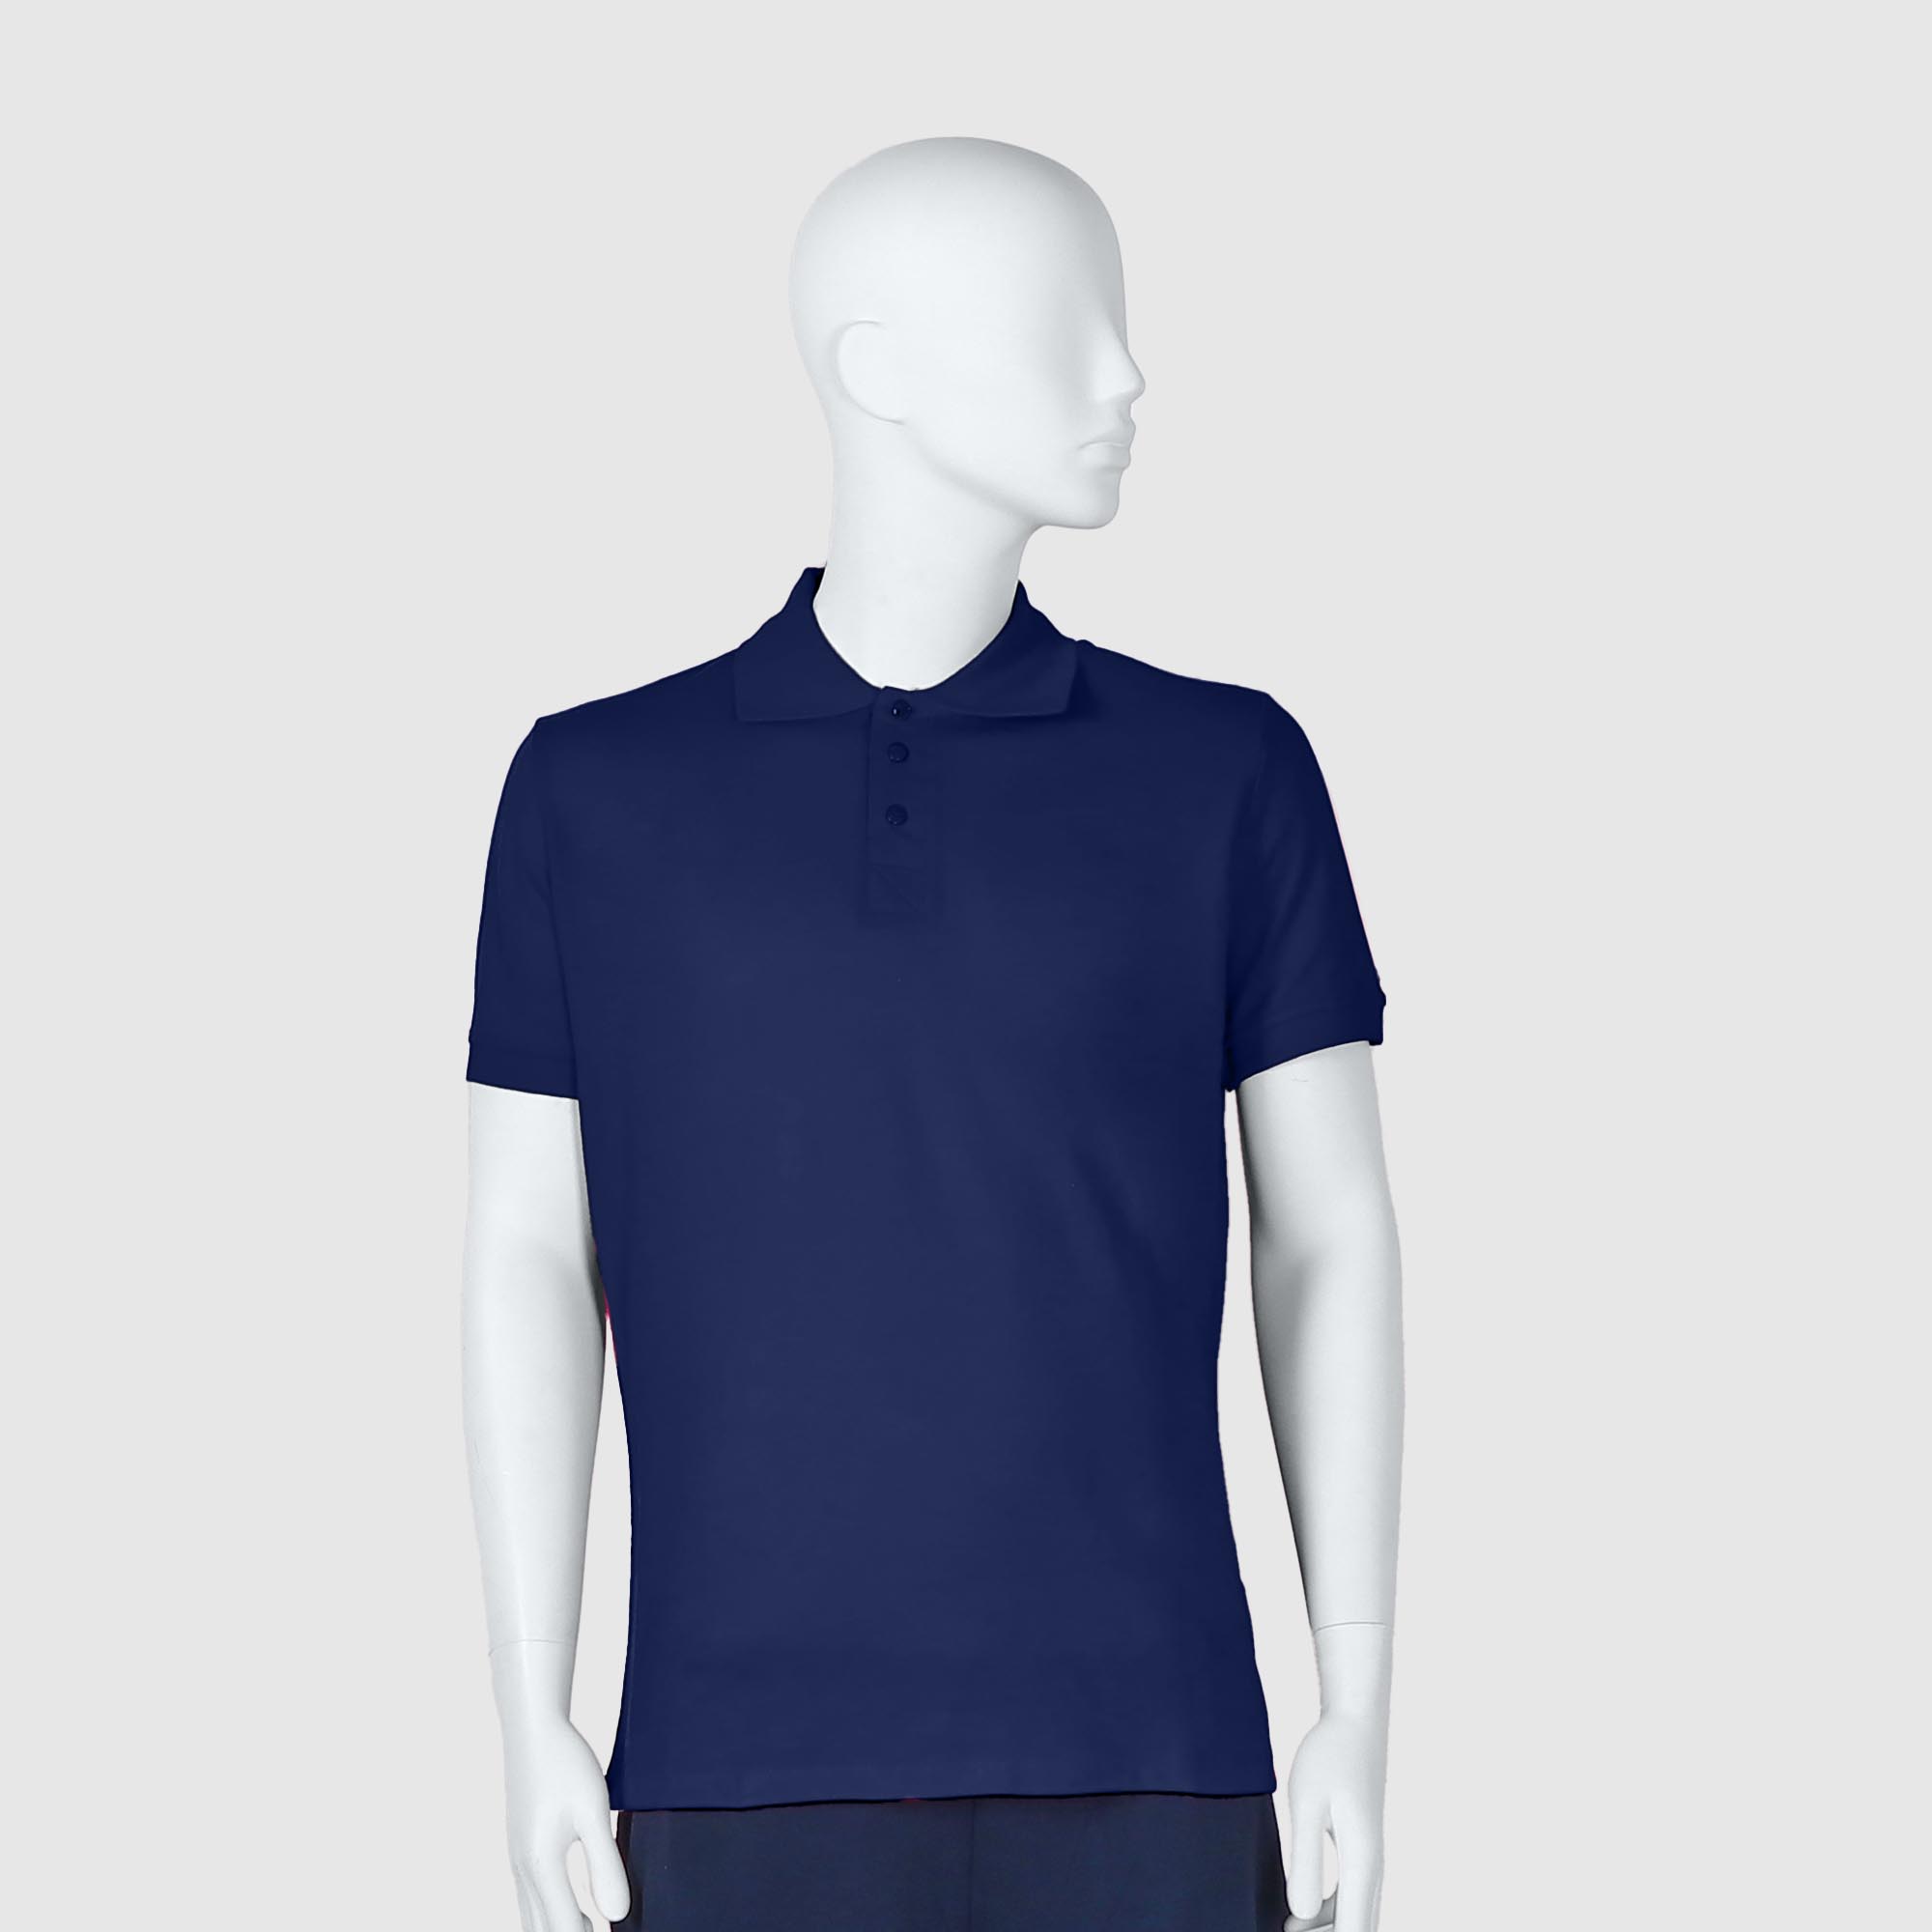 Мужская футболка-поло Diva Teks синяя (DTD-10), цвет синий, размер 48-50 - фото 1